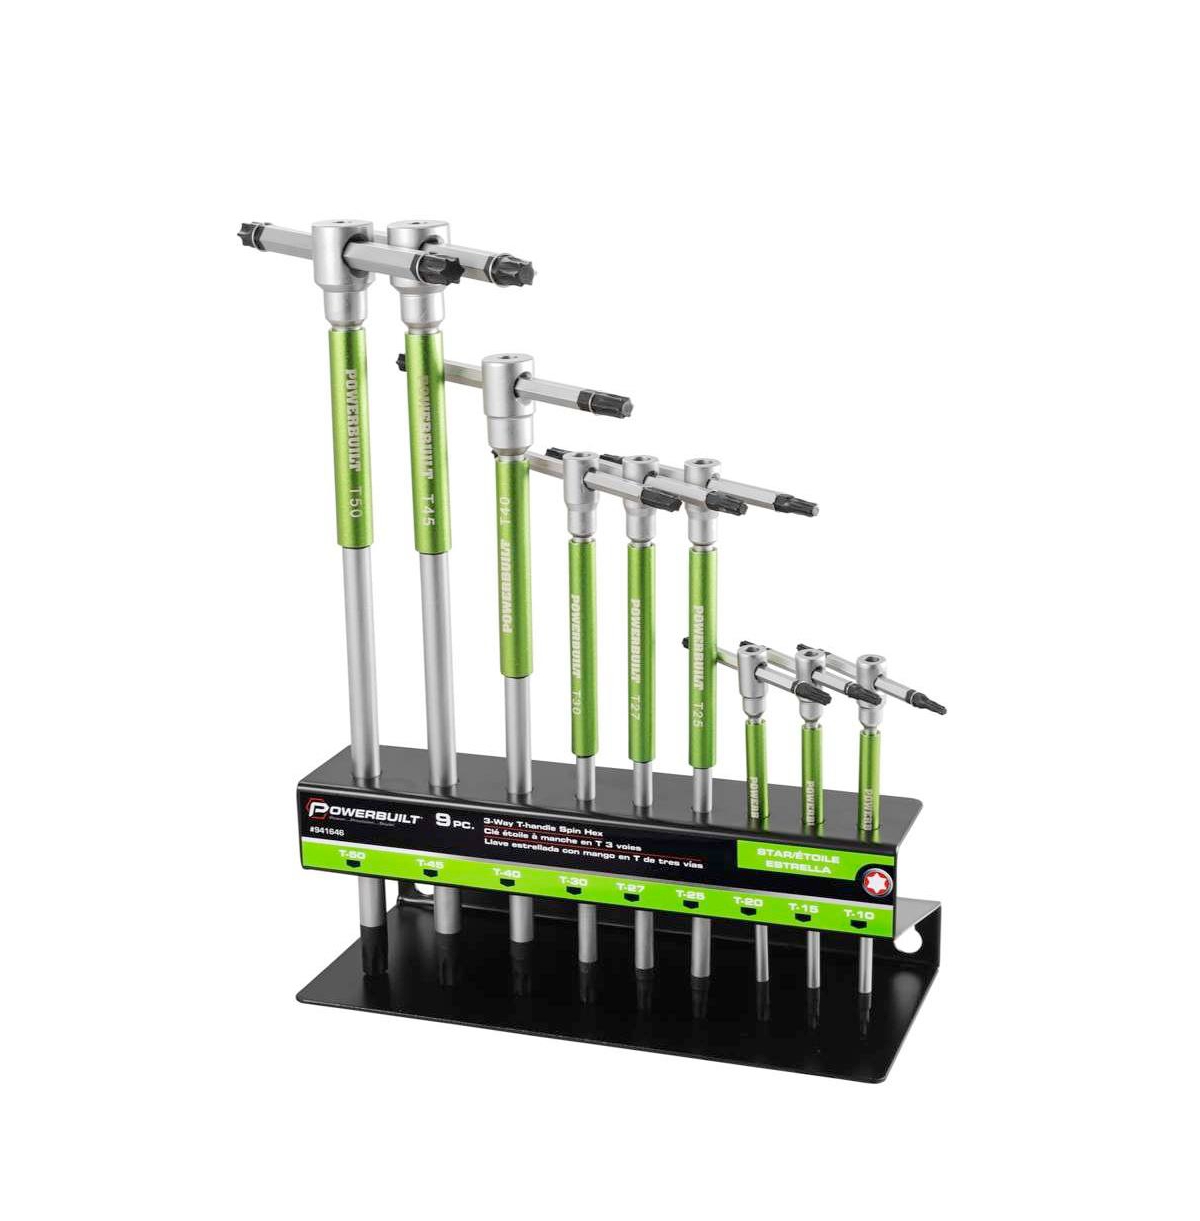 9 Piece Torx T-Handle Hex Key Wrench Set with Storage Rack - Green